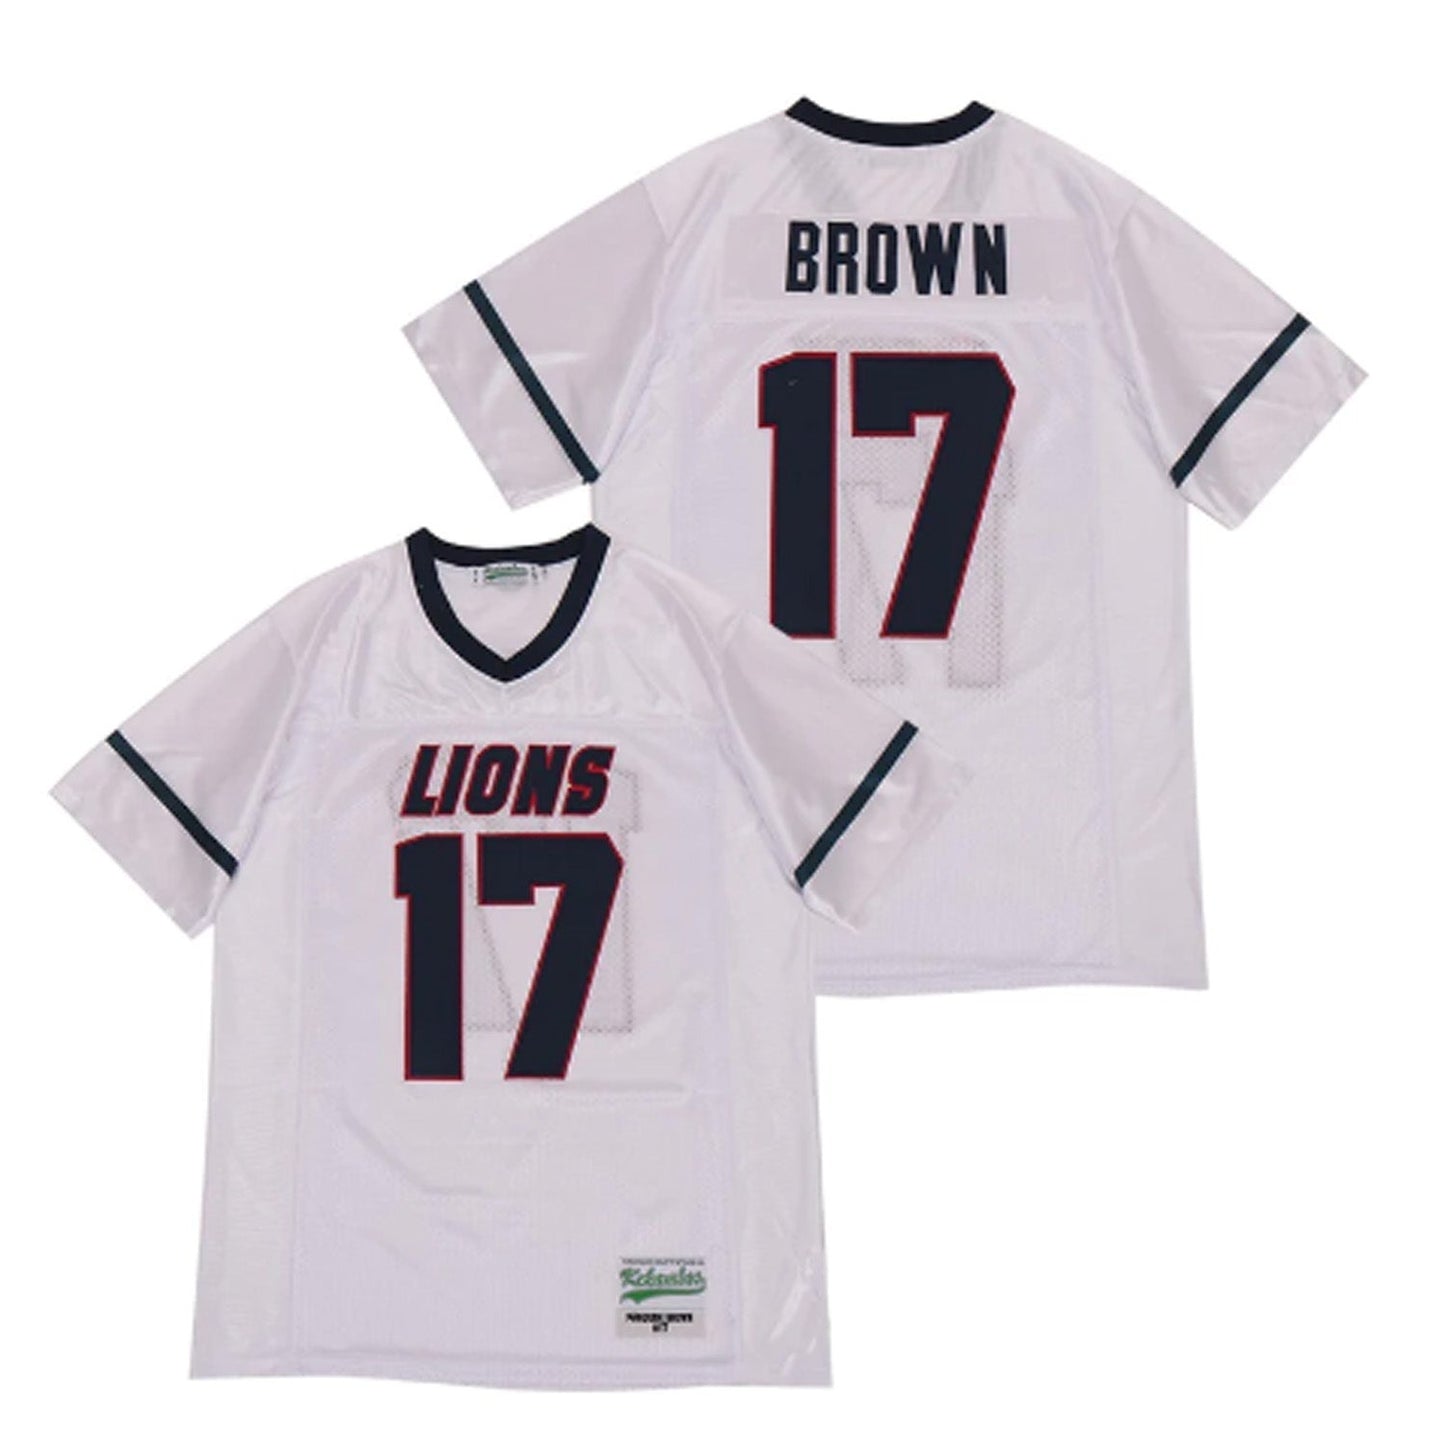 Lions 'Brown' Football Football 17 Jersey